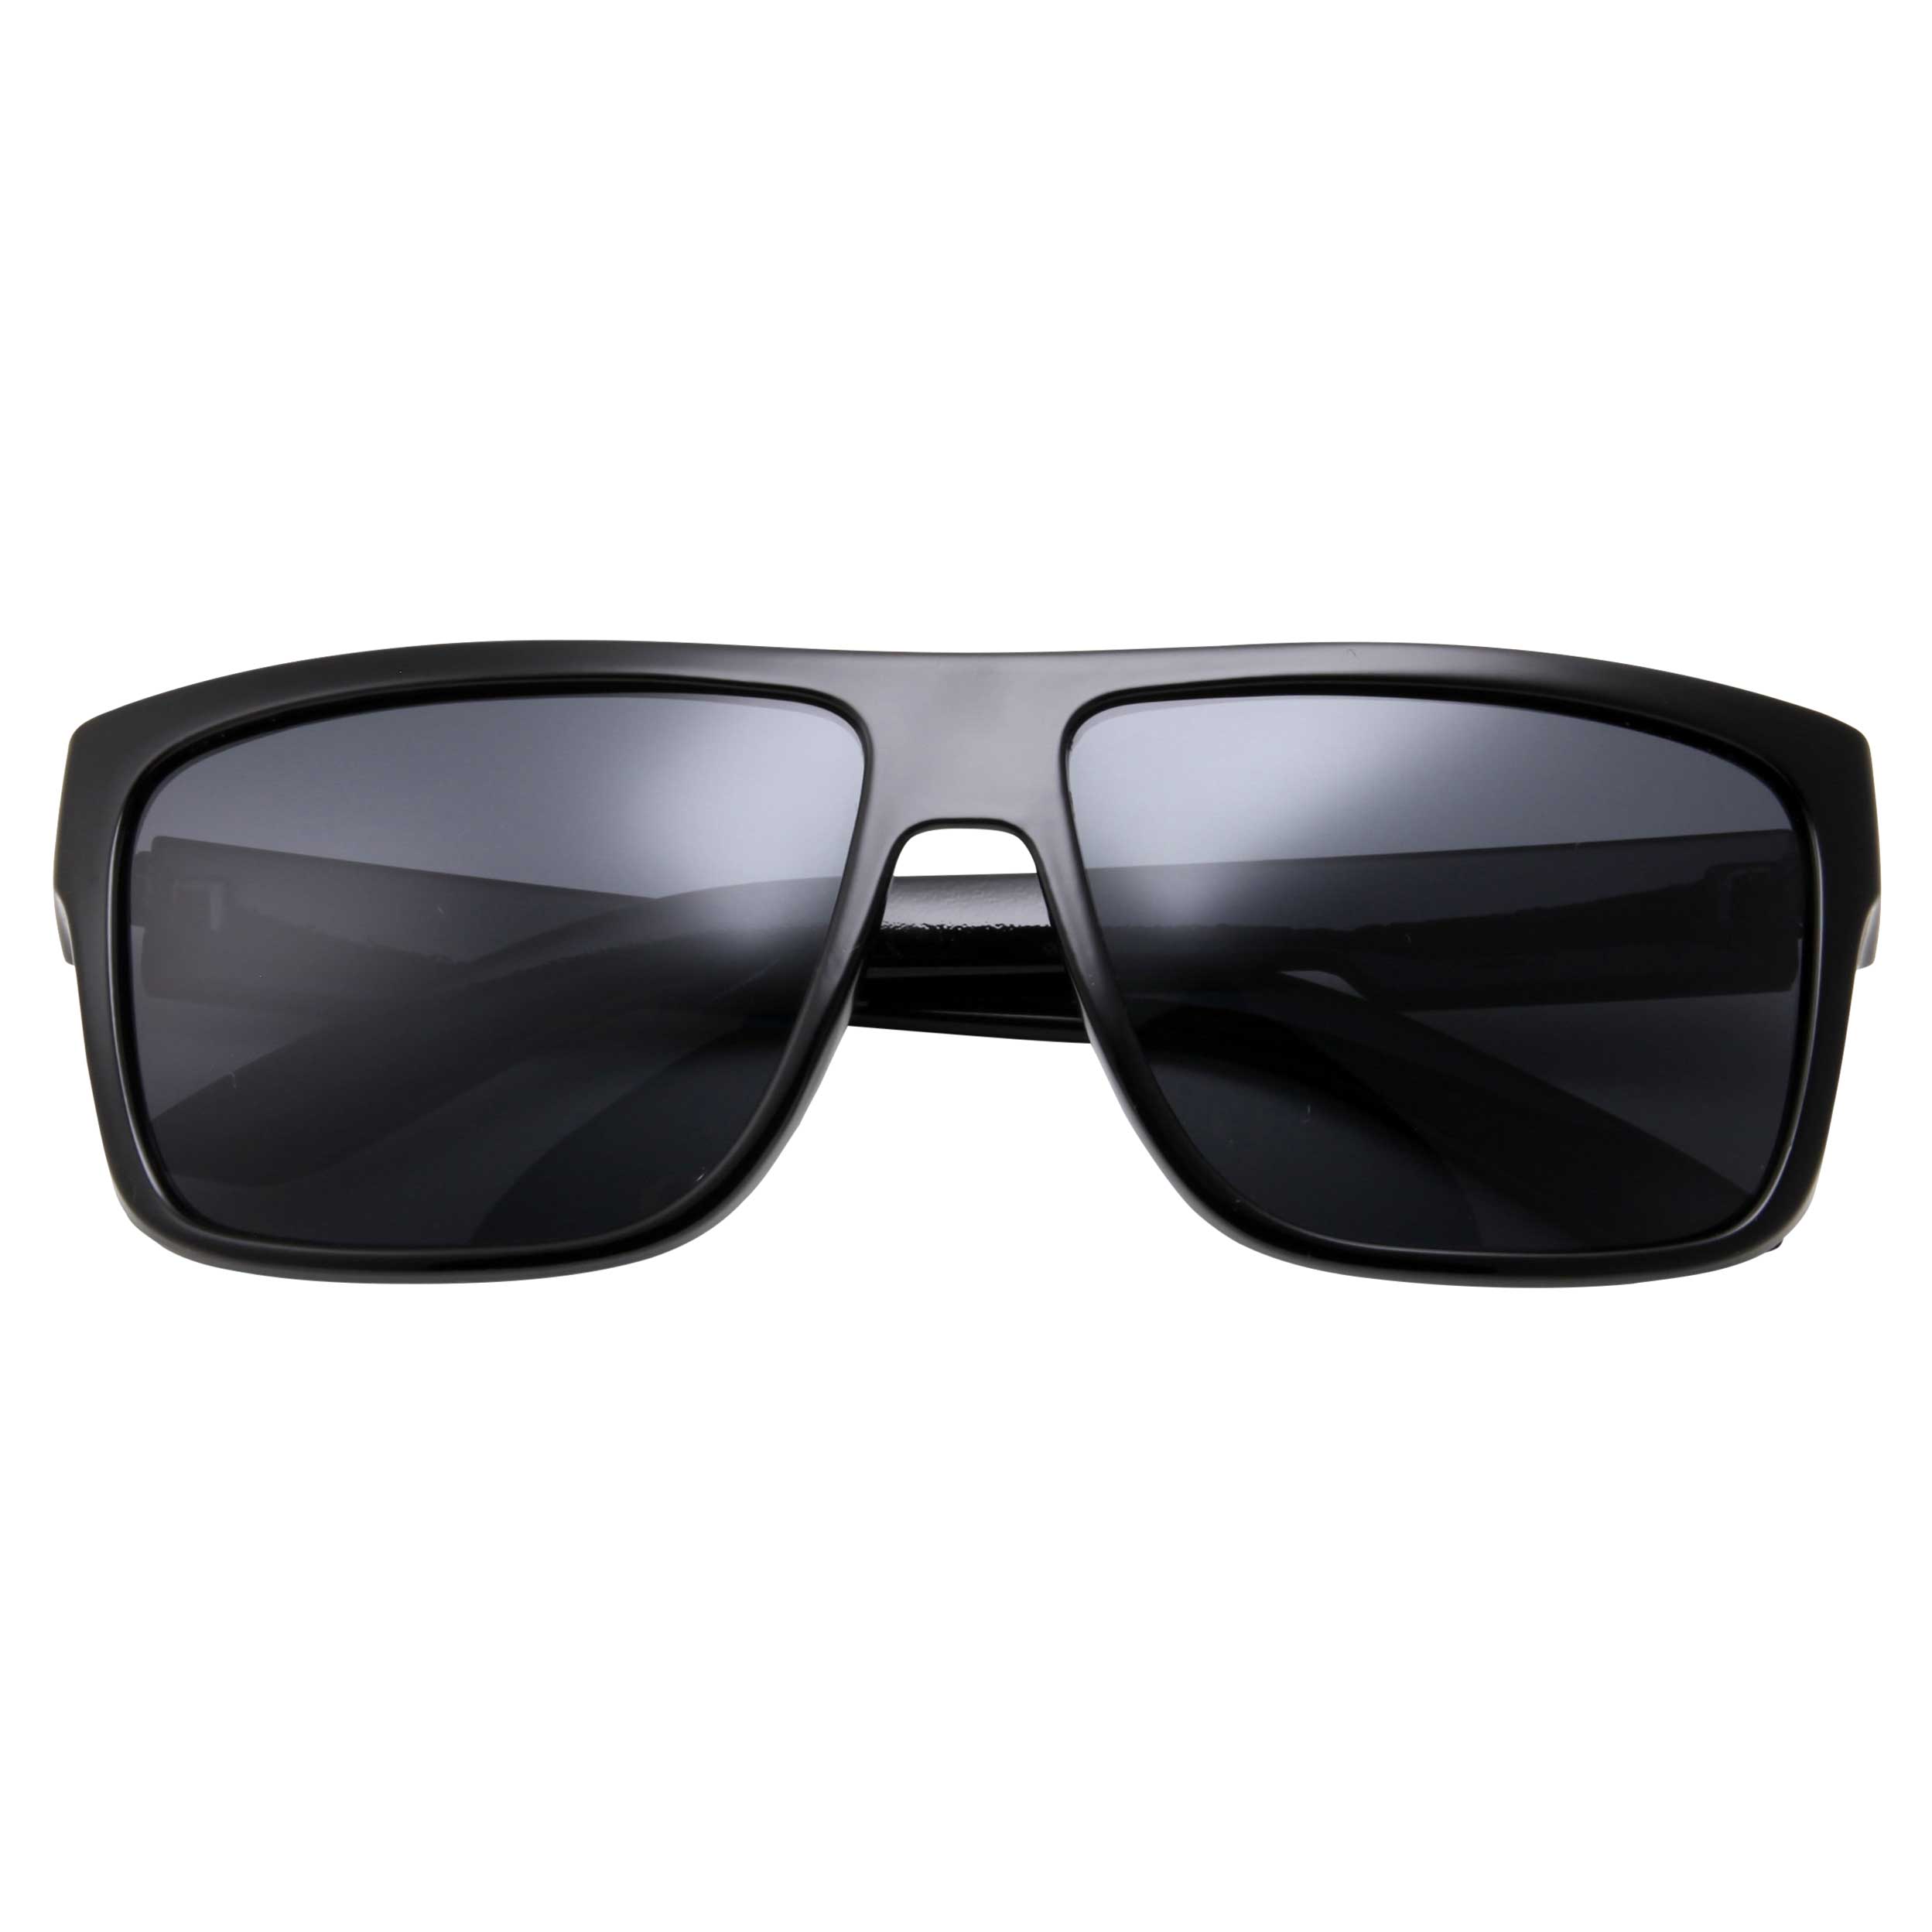 grinderPUNCH Men’s Polarized Lens Flat Top Lifestyle Sunglasses Black Frame - image 2 of 6